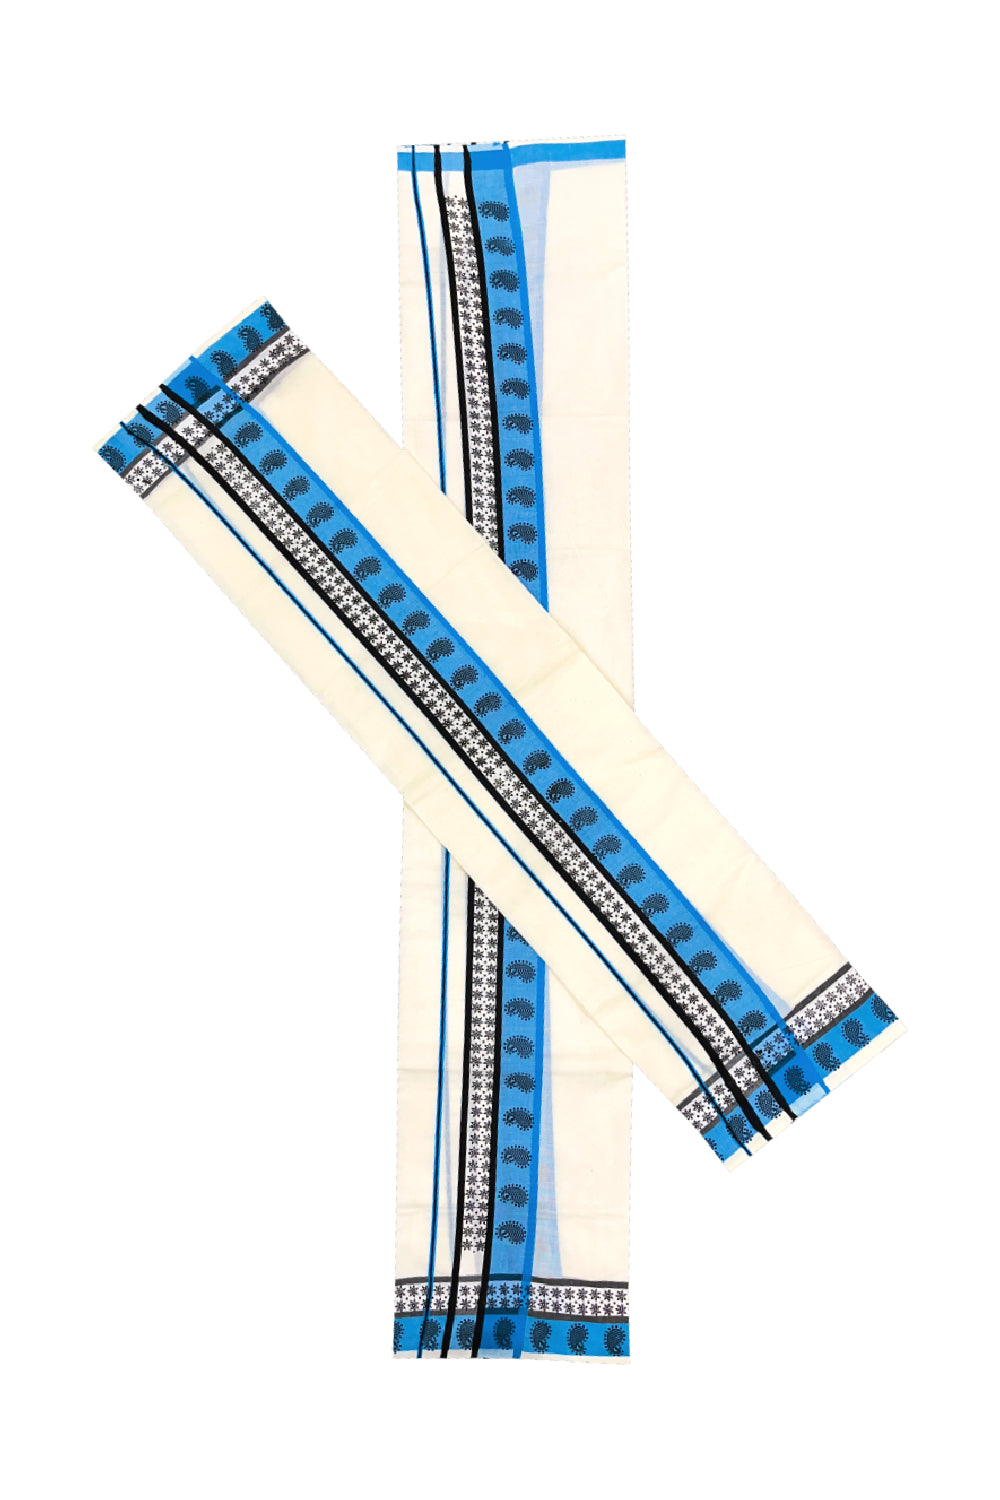 Kerala Cotton Single Set Mundu (Mundum Neriyathum) with Black Block Prints on Blue Border